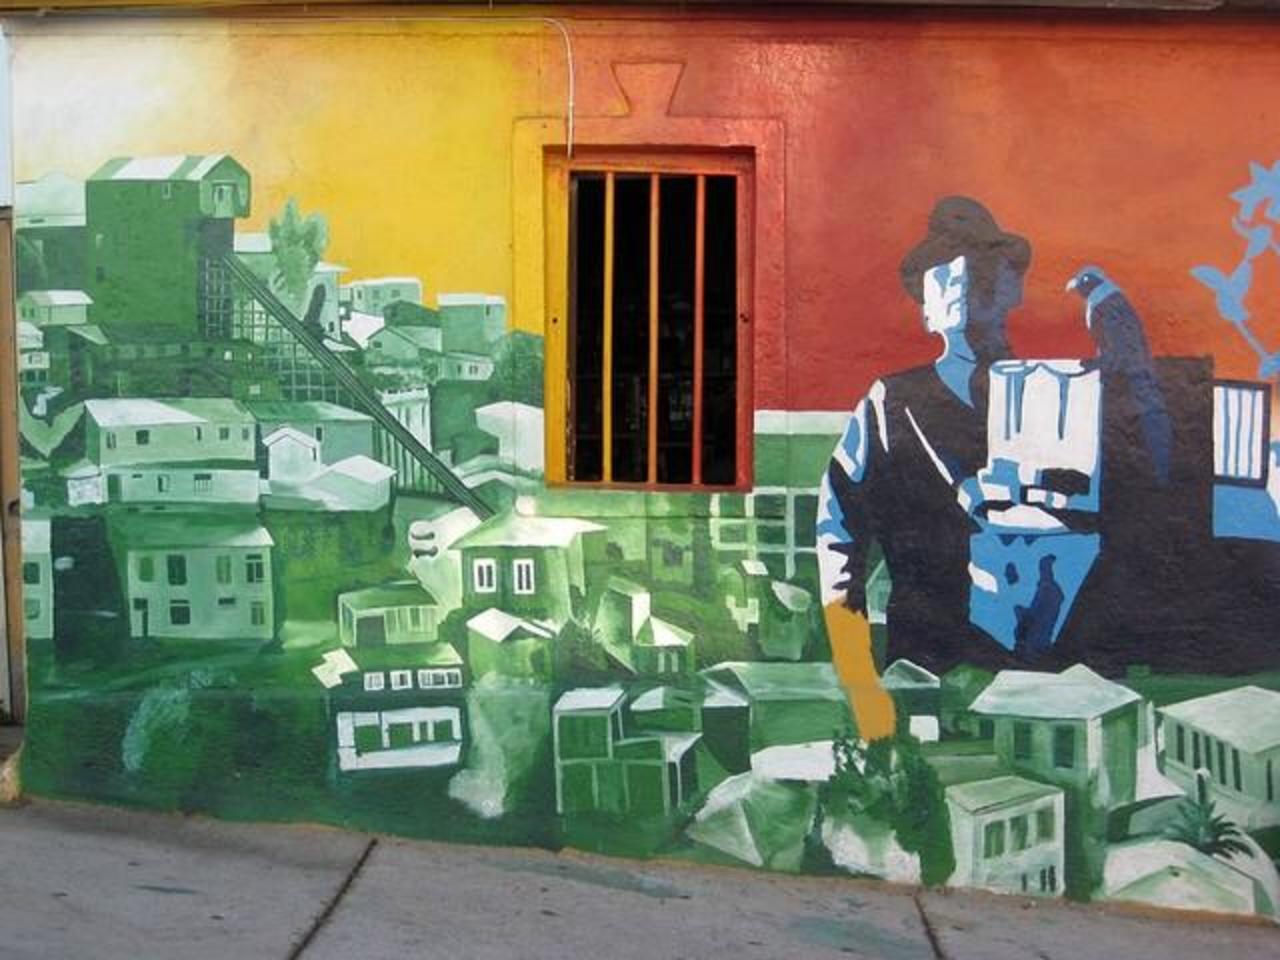 Valparaíso Graffiti

#streetart #art #graffiti #urbanart #mural http://t.co/9nAdY7XpsD by @Pitchuskita #Chile